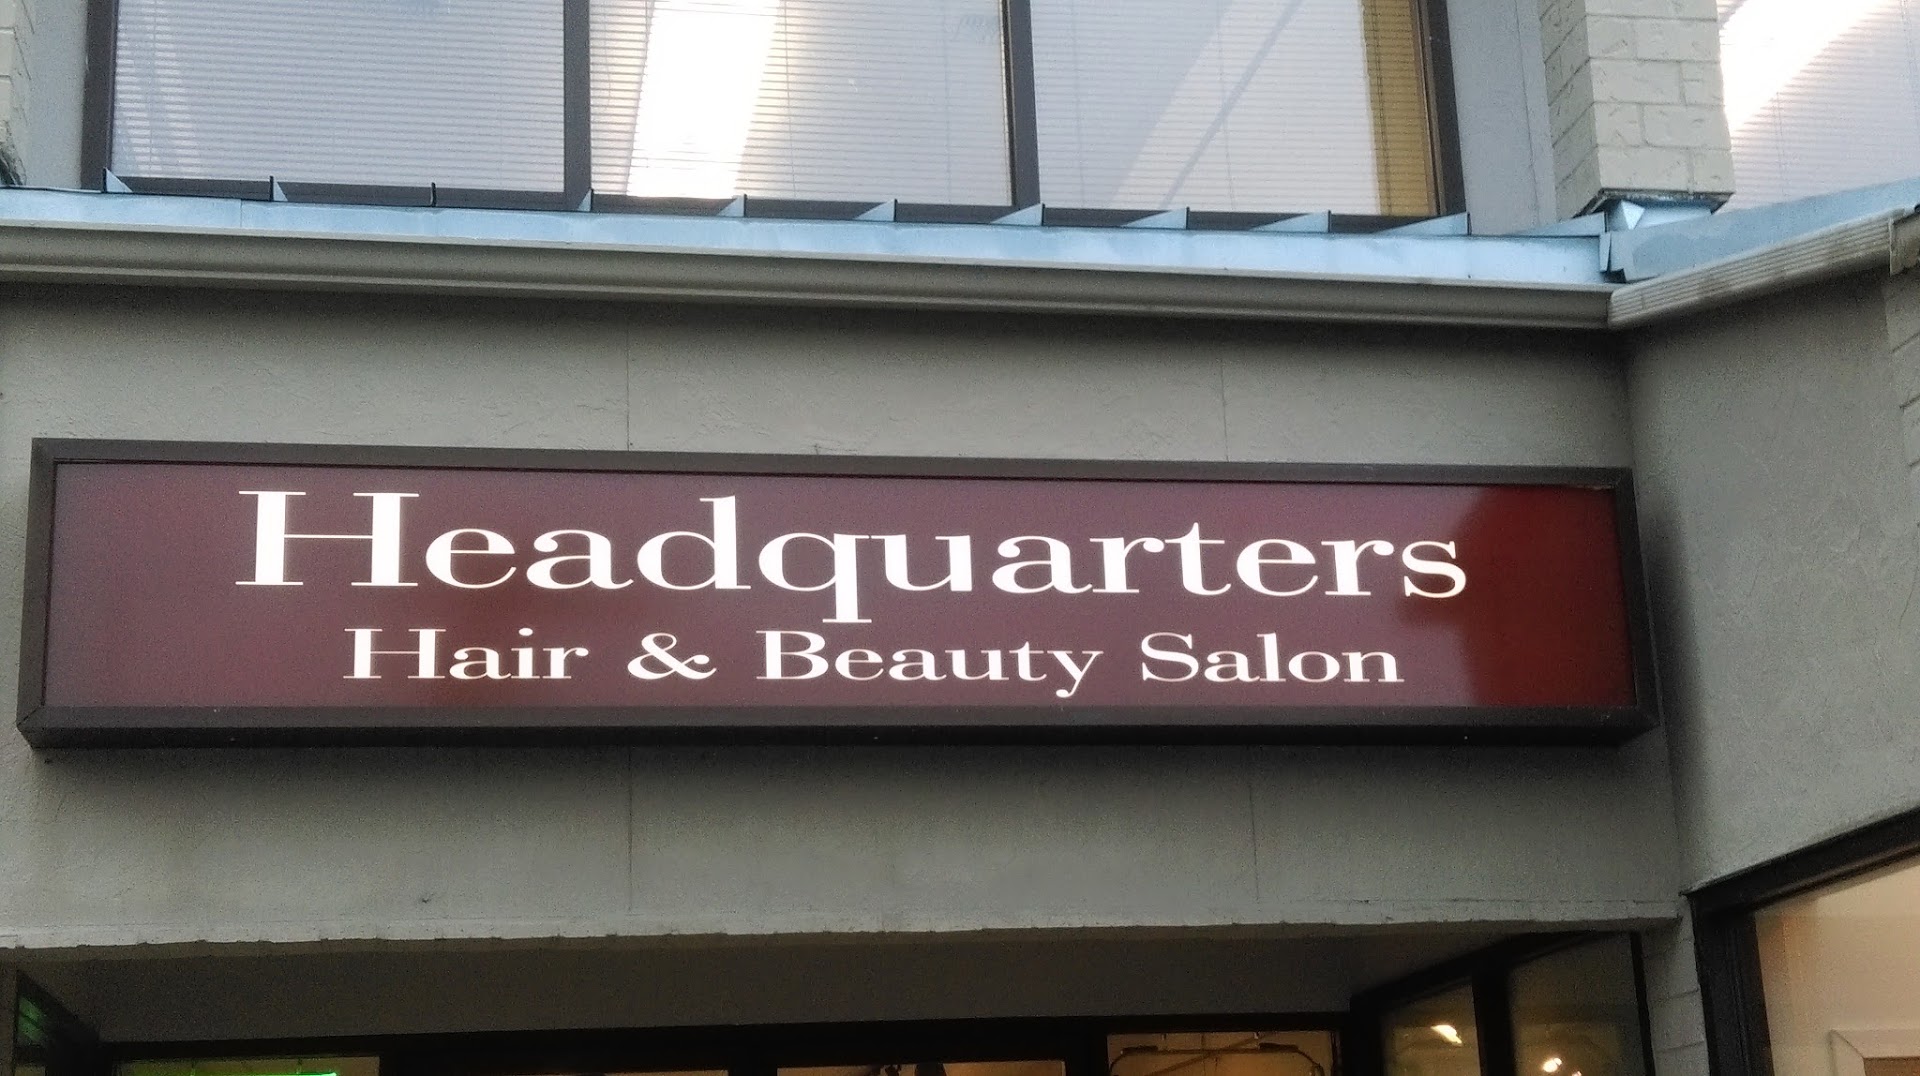 Headquarters Hair & Beauty Salon